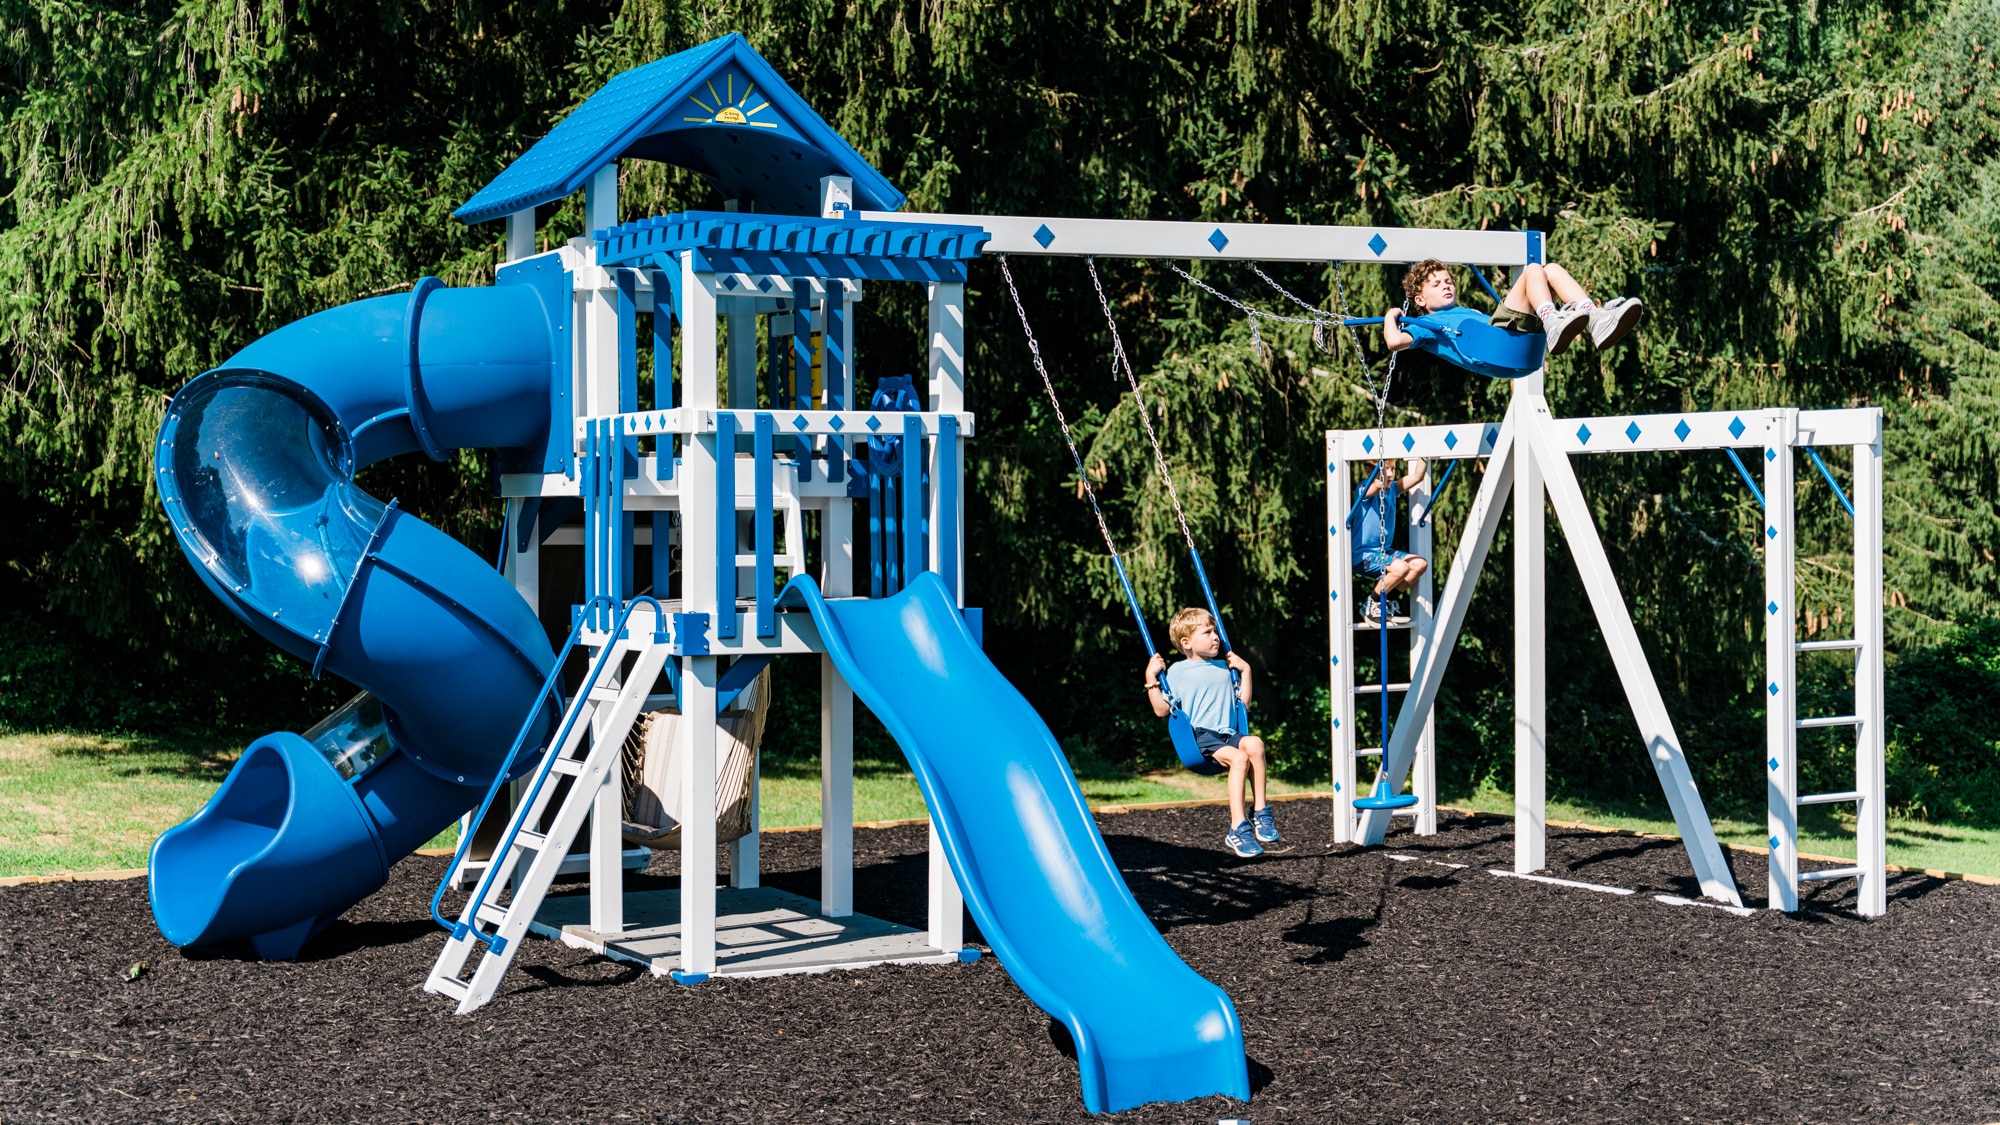 Playground Equipment Lancaster Pa